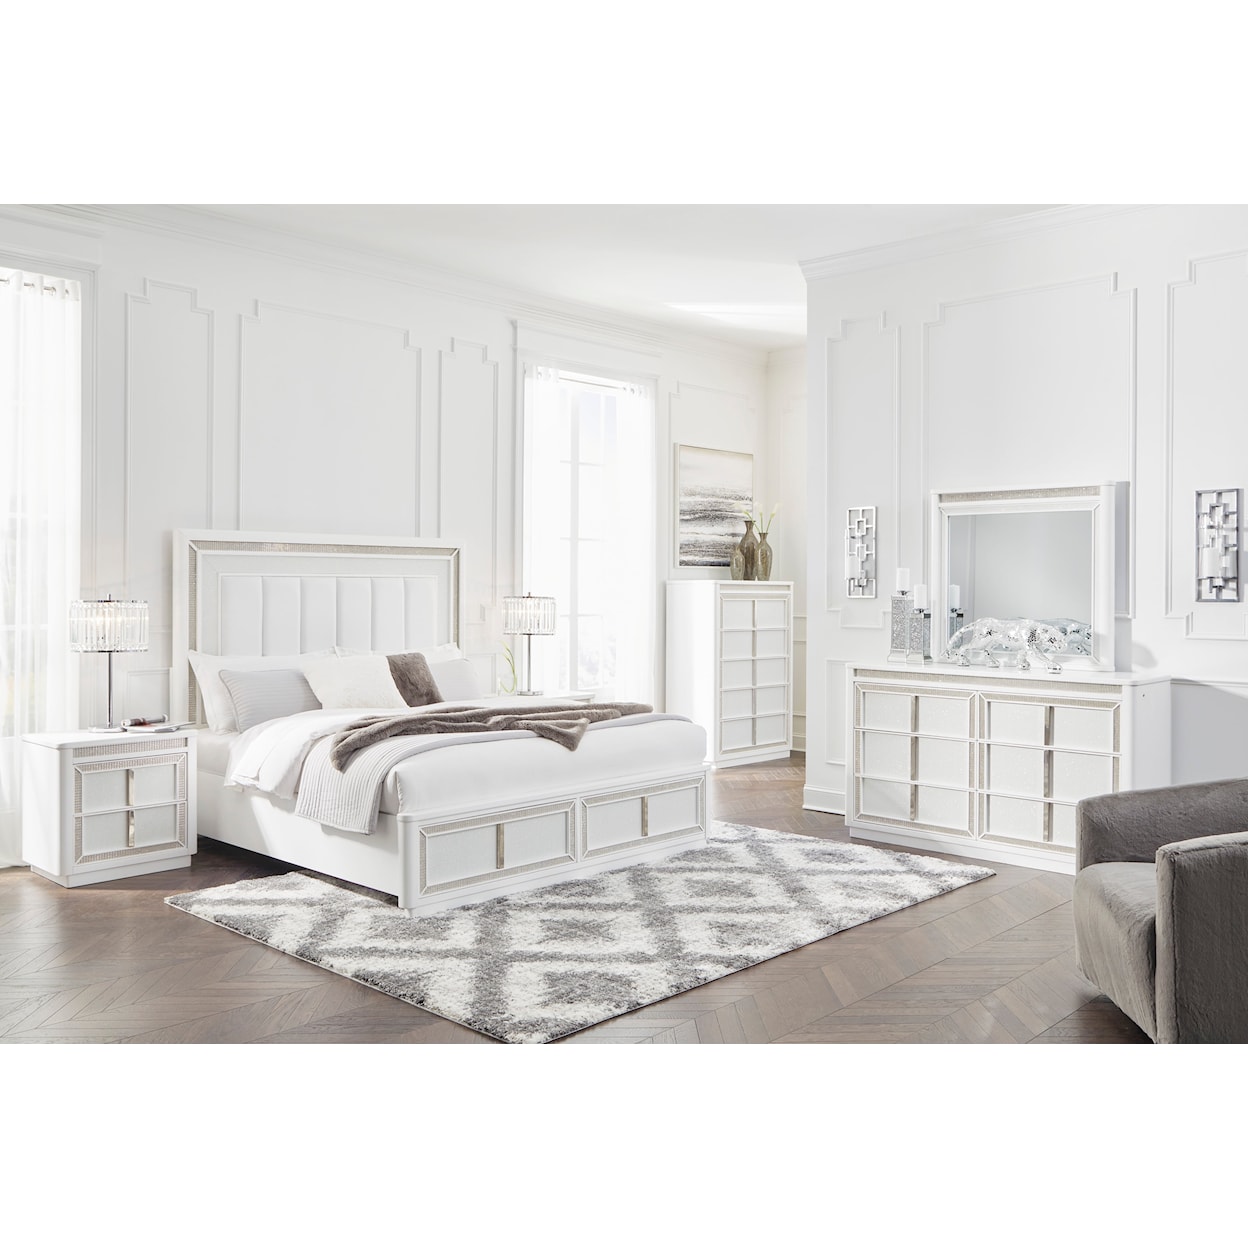 Ashley Furniture Signature Design Chalanna King Bedroom Set